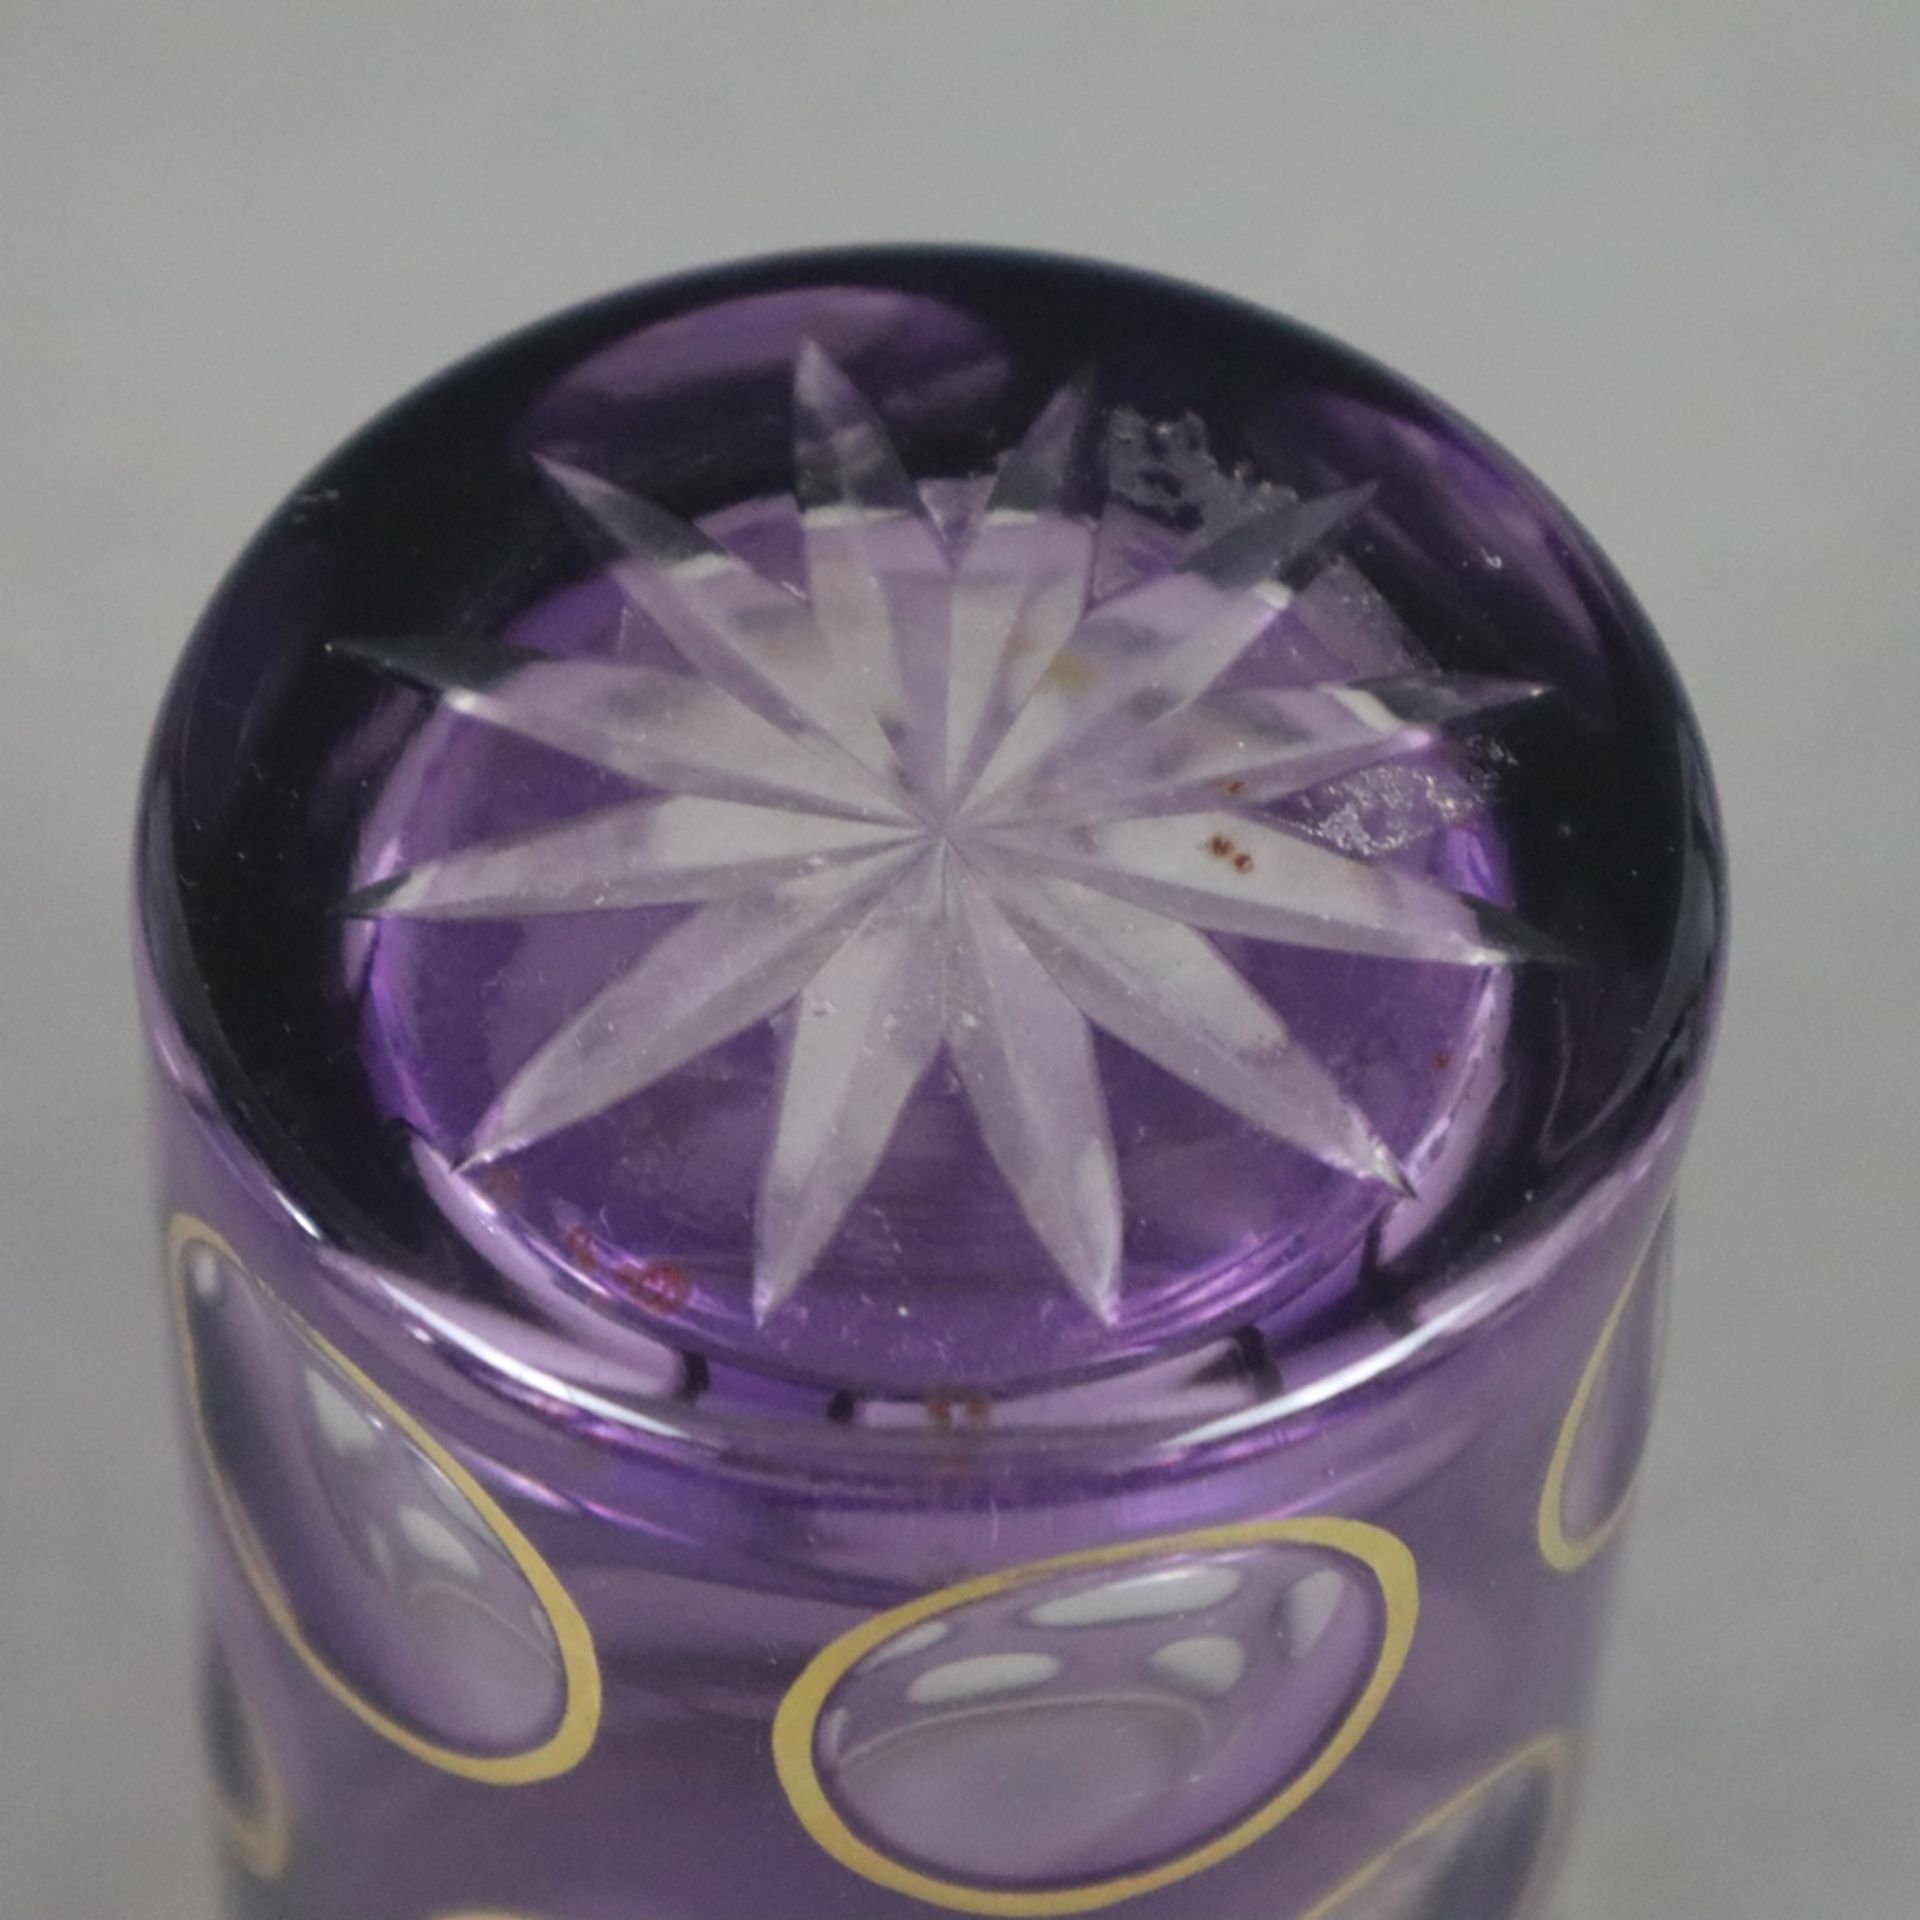 Glasbecher - Böhmen Anfang 20. Jh., farbloses Glas, violettfarben überfangen, zylindrische Wandung - Image 4 of 4